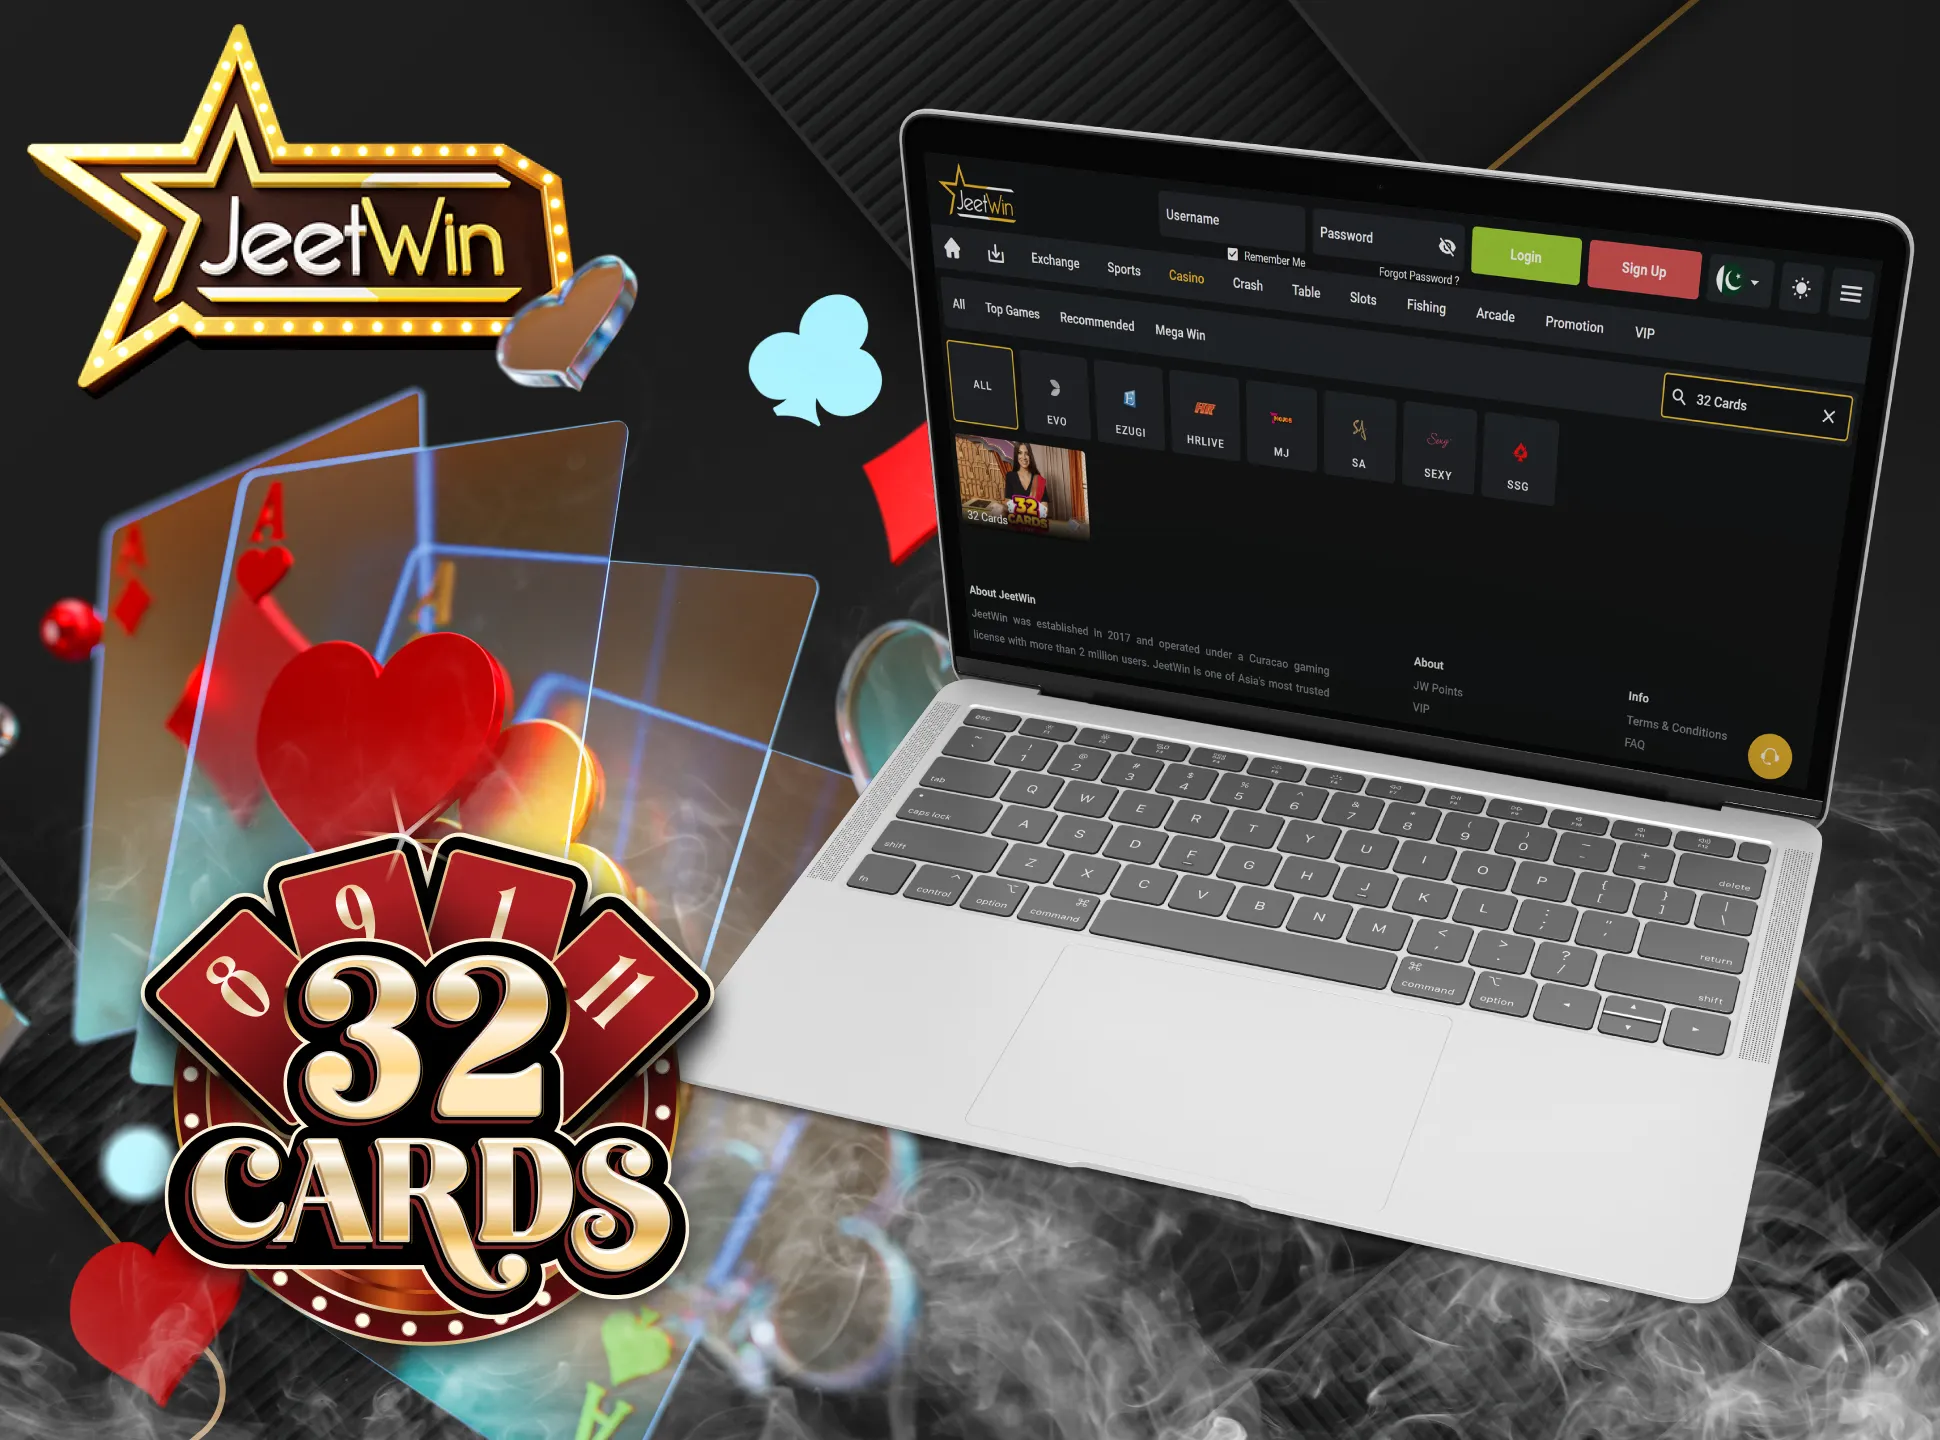 JeetWin ویب سائٹ پر 32 کارڈز گیم سے لطف اندوز ہوں۔